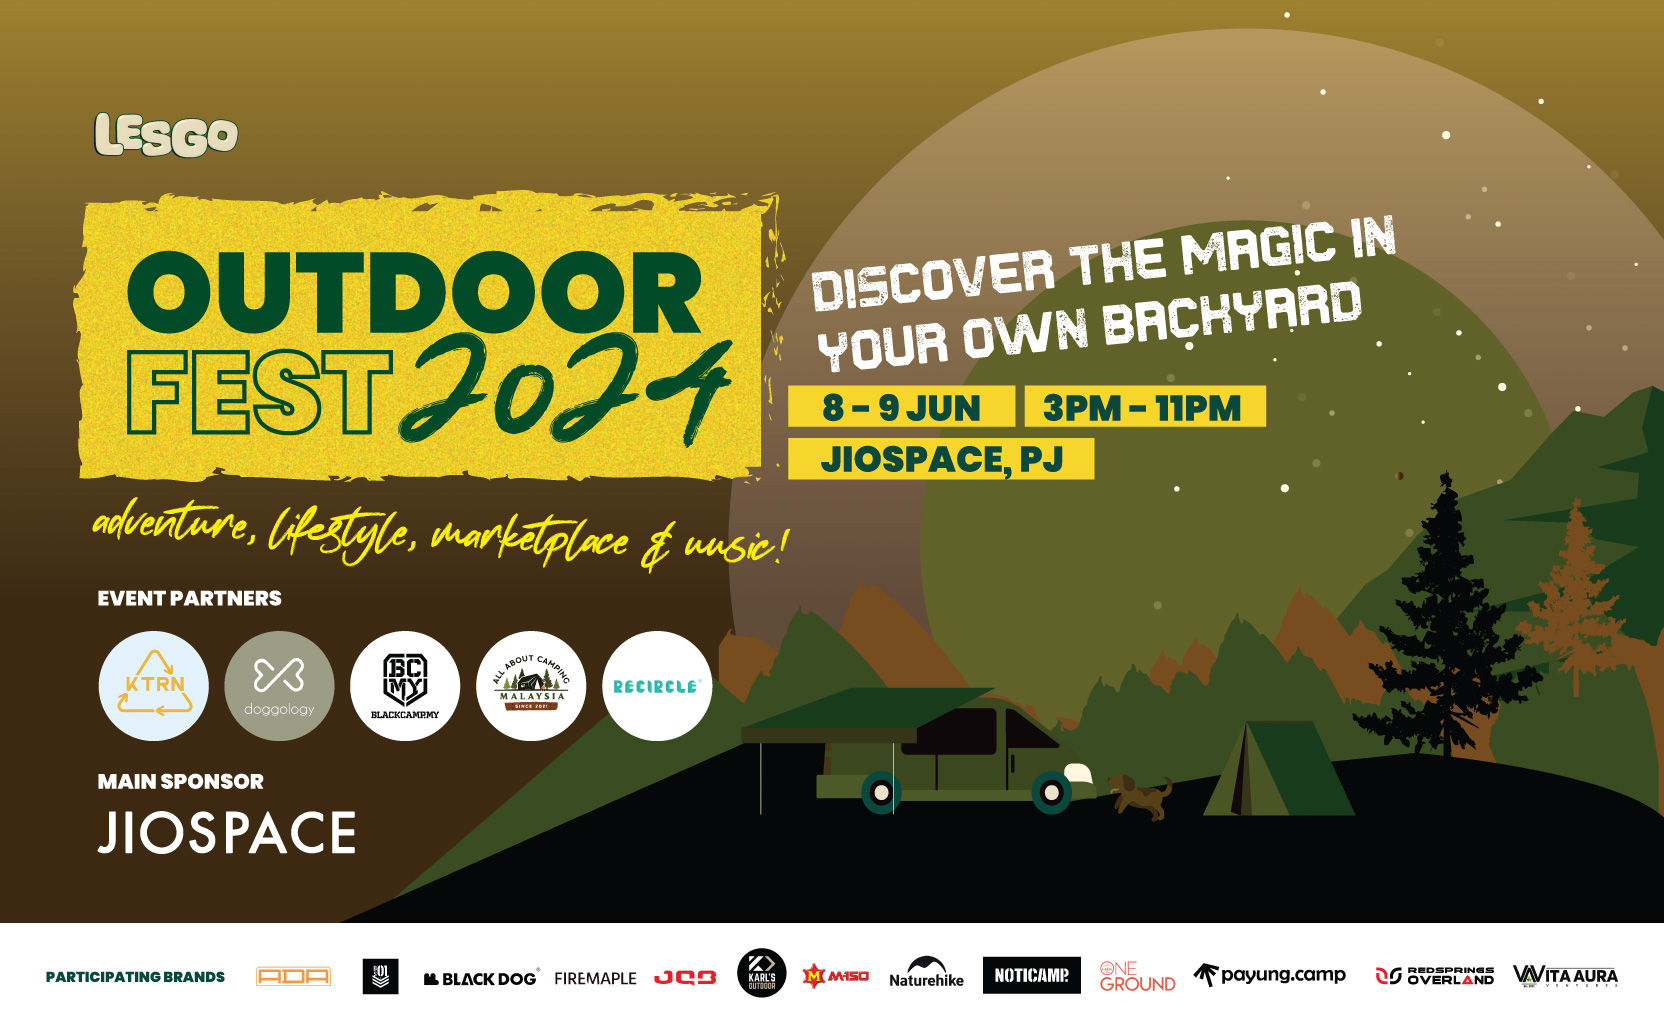 outdoor fest 2024 brings alfresco lifestyle adventures to jiospace pj, 8-9 june 2024